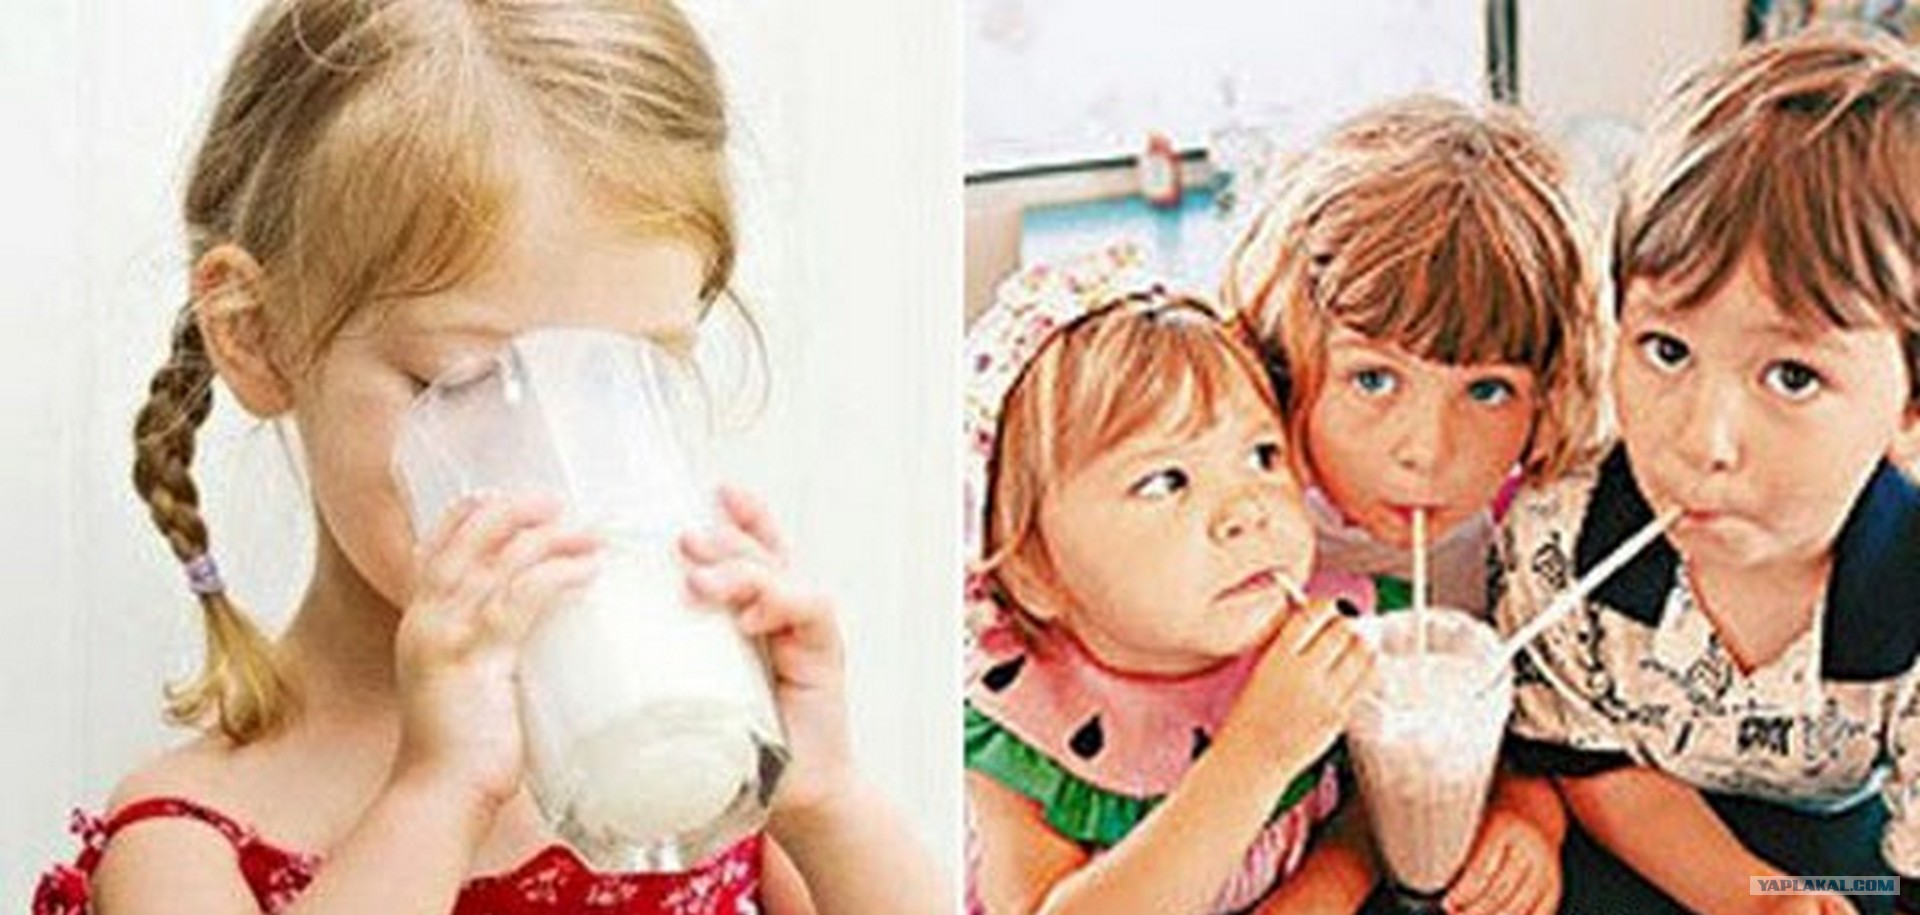 Дети пьют коктейли. Молоко из детства. Дети пьют молочный коктейль. Ребенок пьет коктейль. Ребенок с молочным коктейлем.